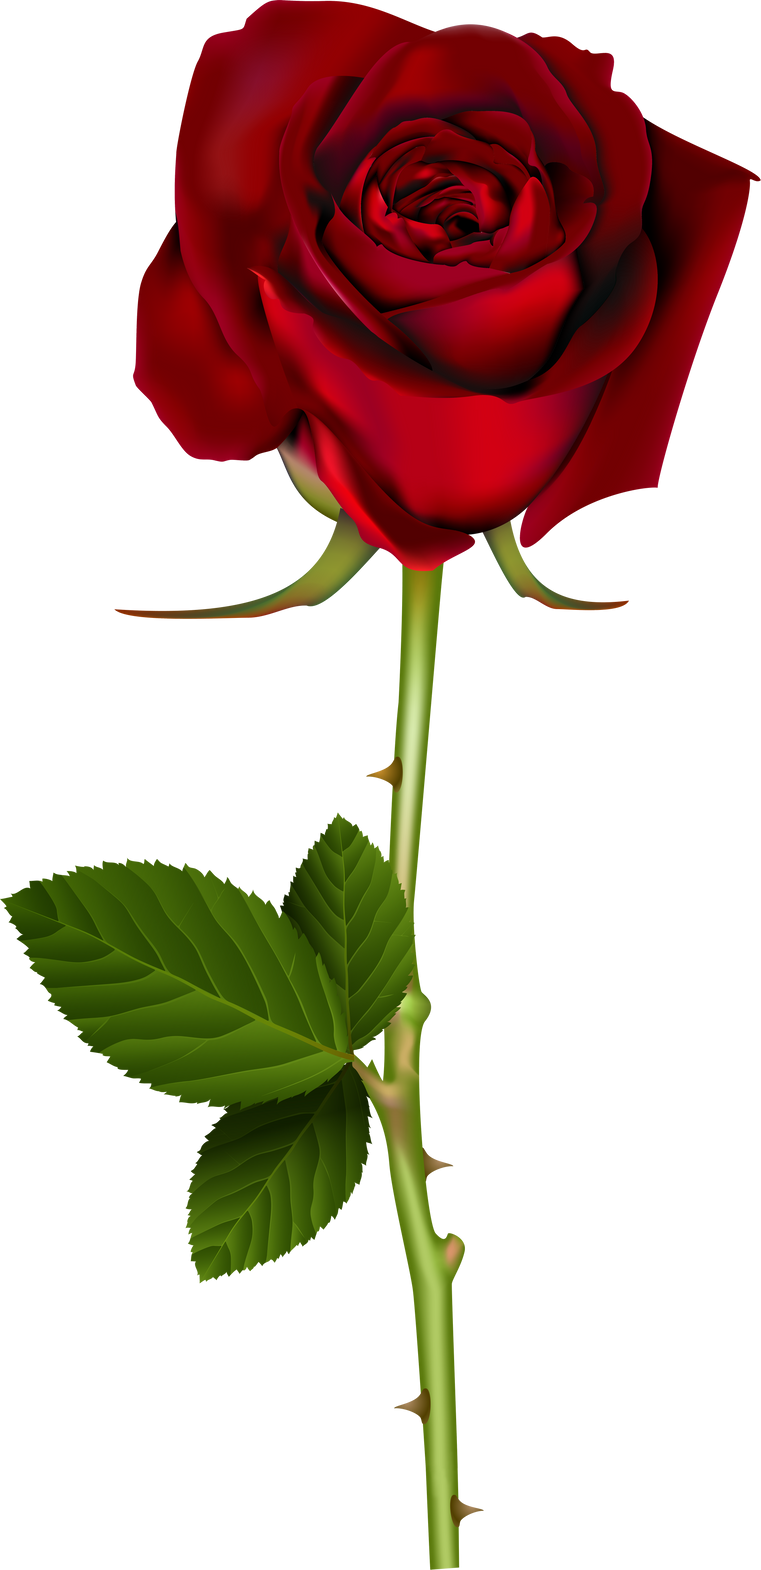 red rose with stem illustration